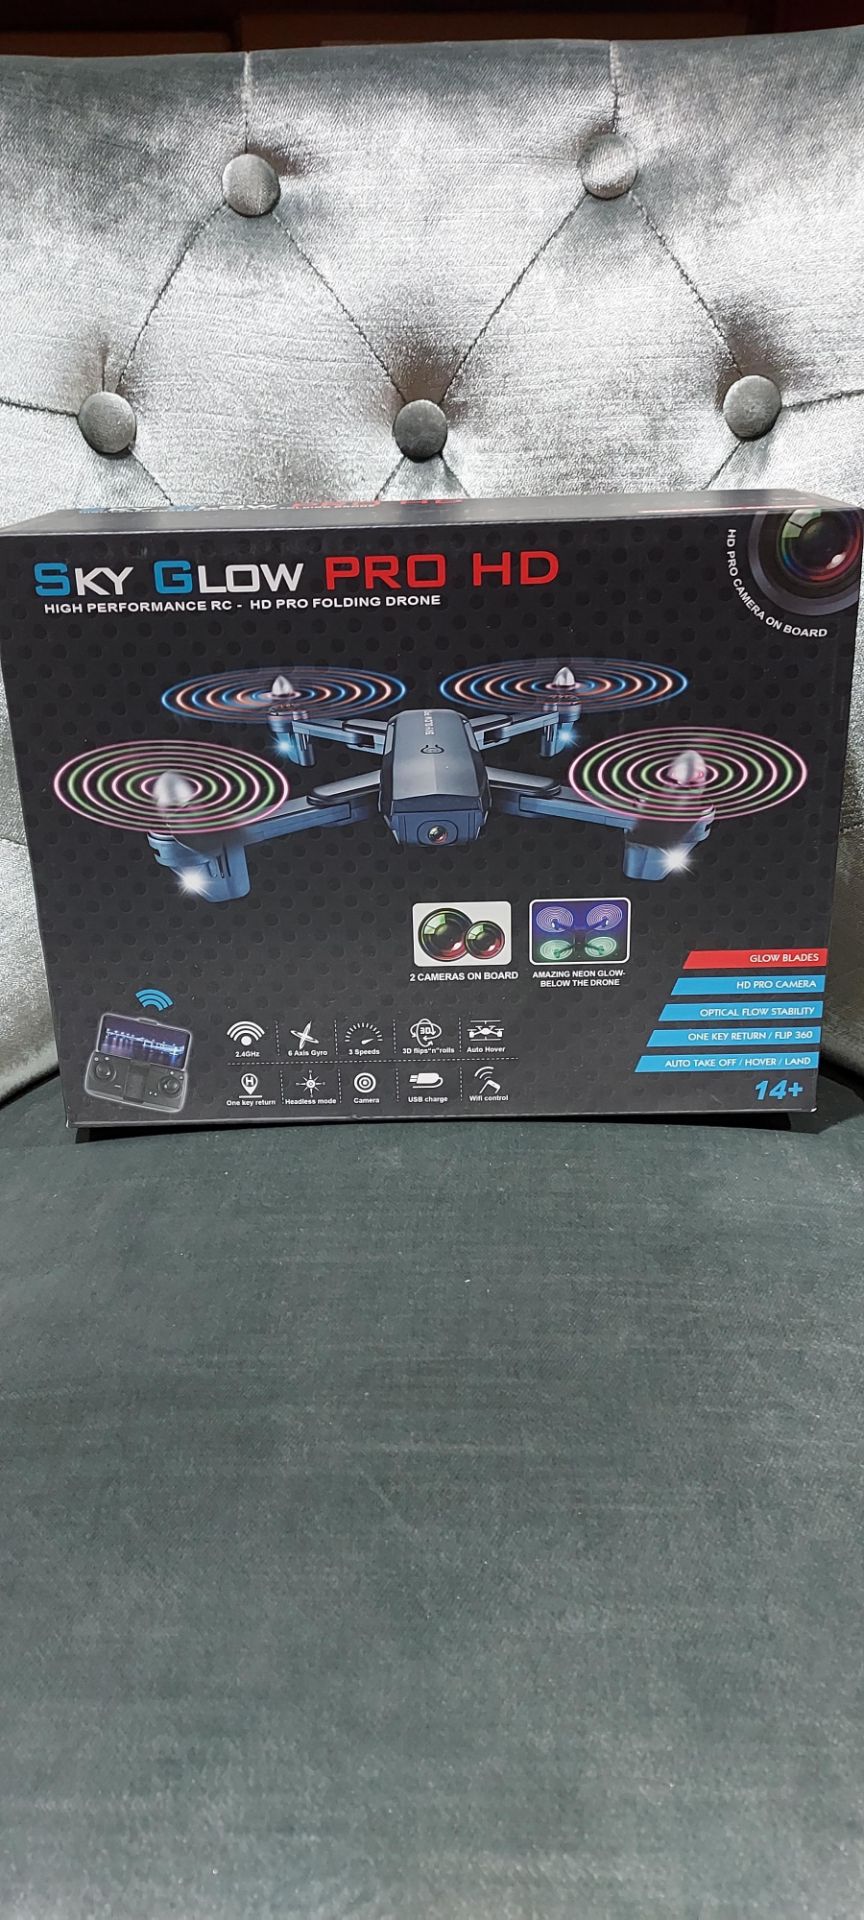 12 X SKY GLOW PRO HD HIGH PERFORMANCE RC - HD PRO FOLDING DRONE - WITH HD PRO CAMERA - GLOW BLADES -